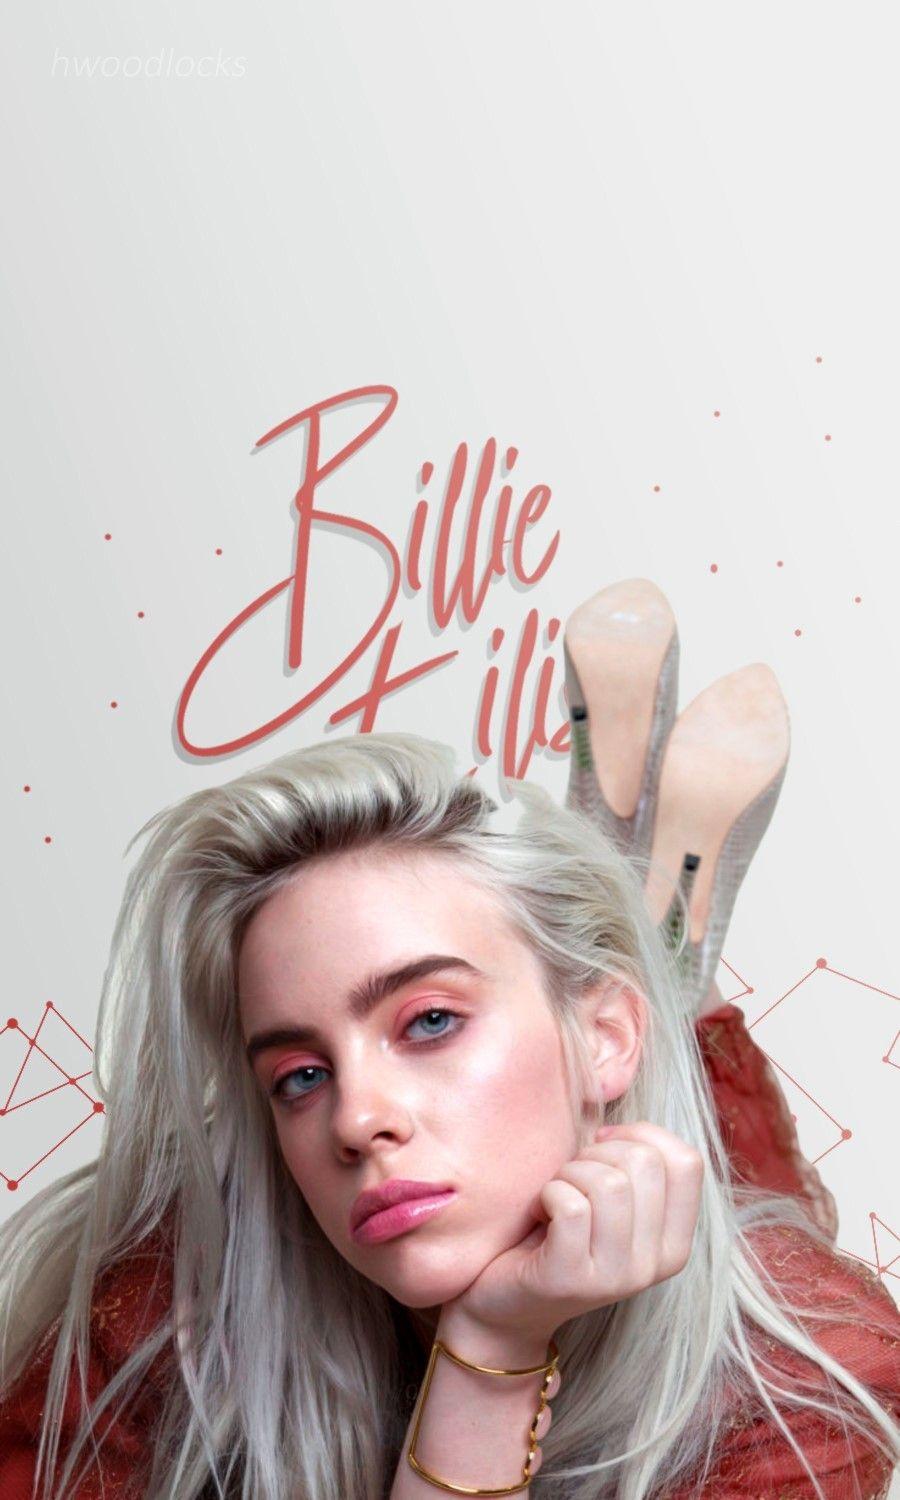 Download Billie Eilish Wallpaper For iPhone & iPad